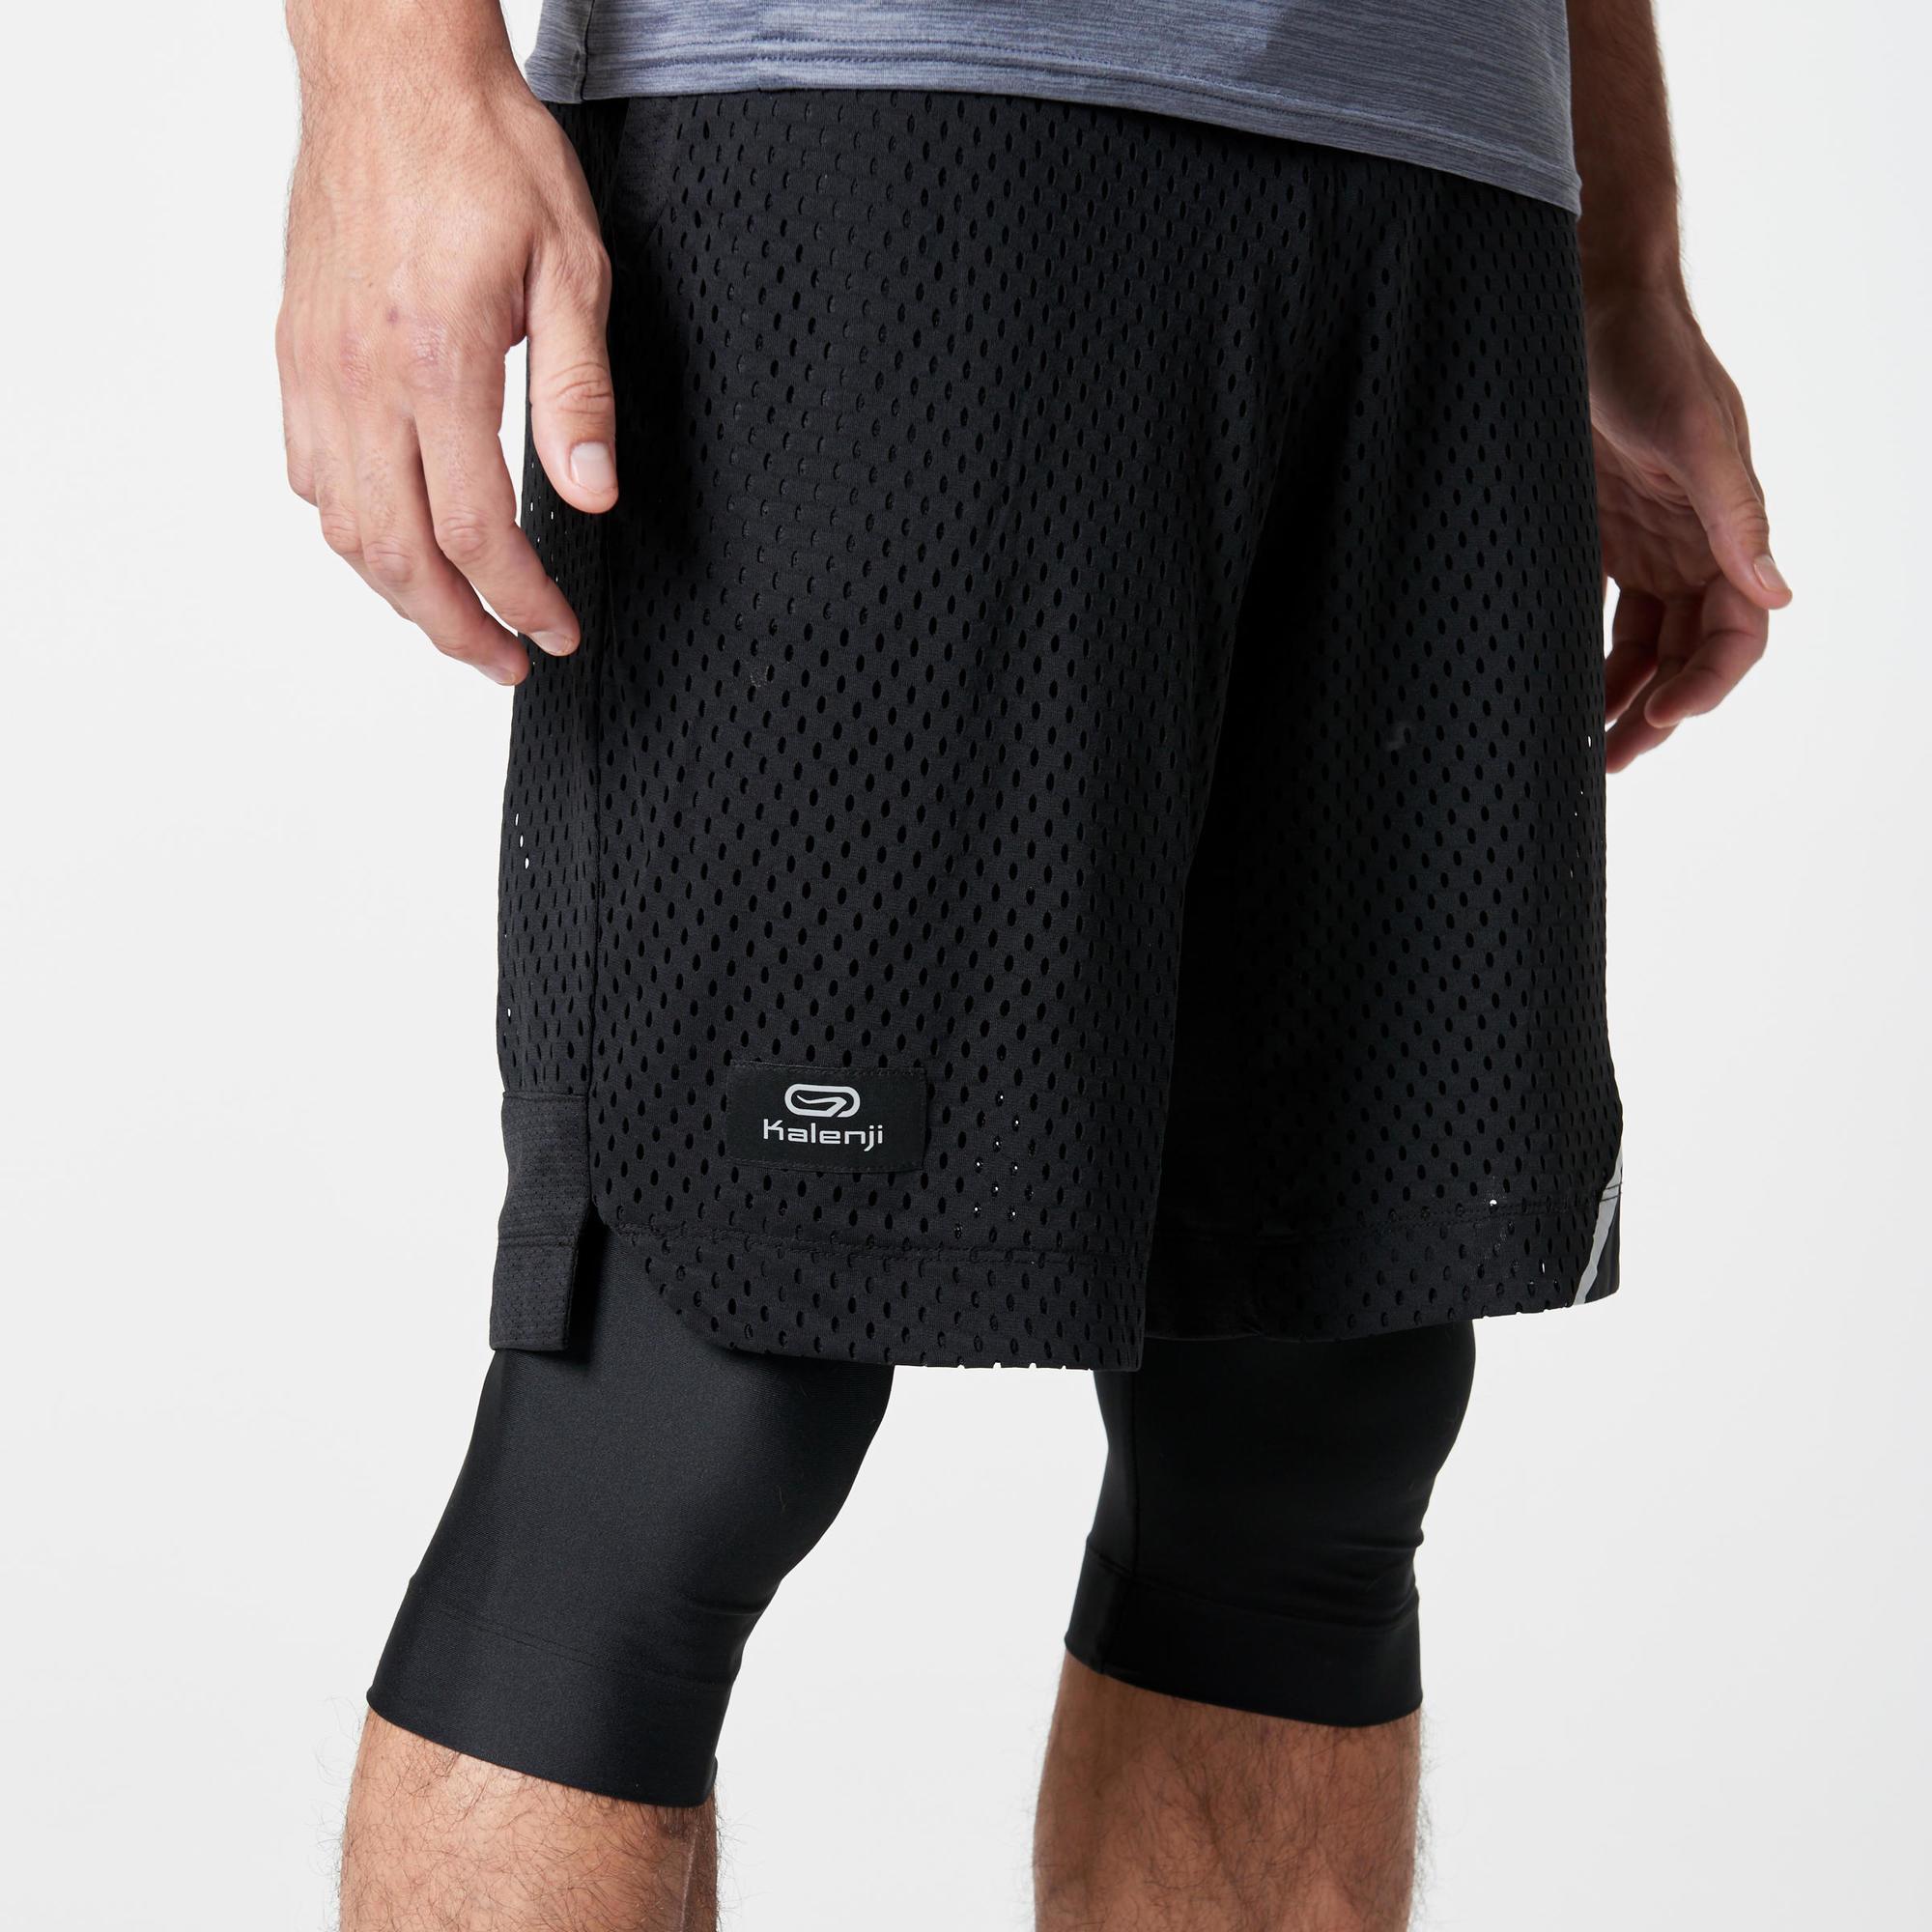 decathlon kalenji shorts